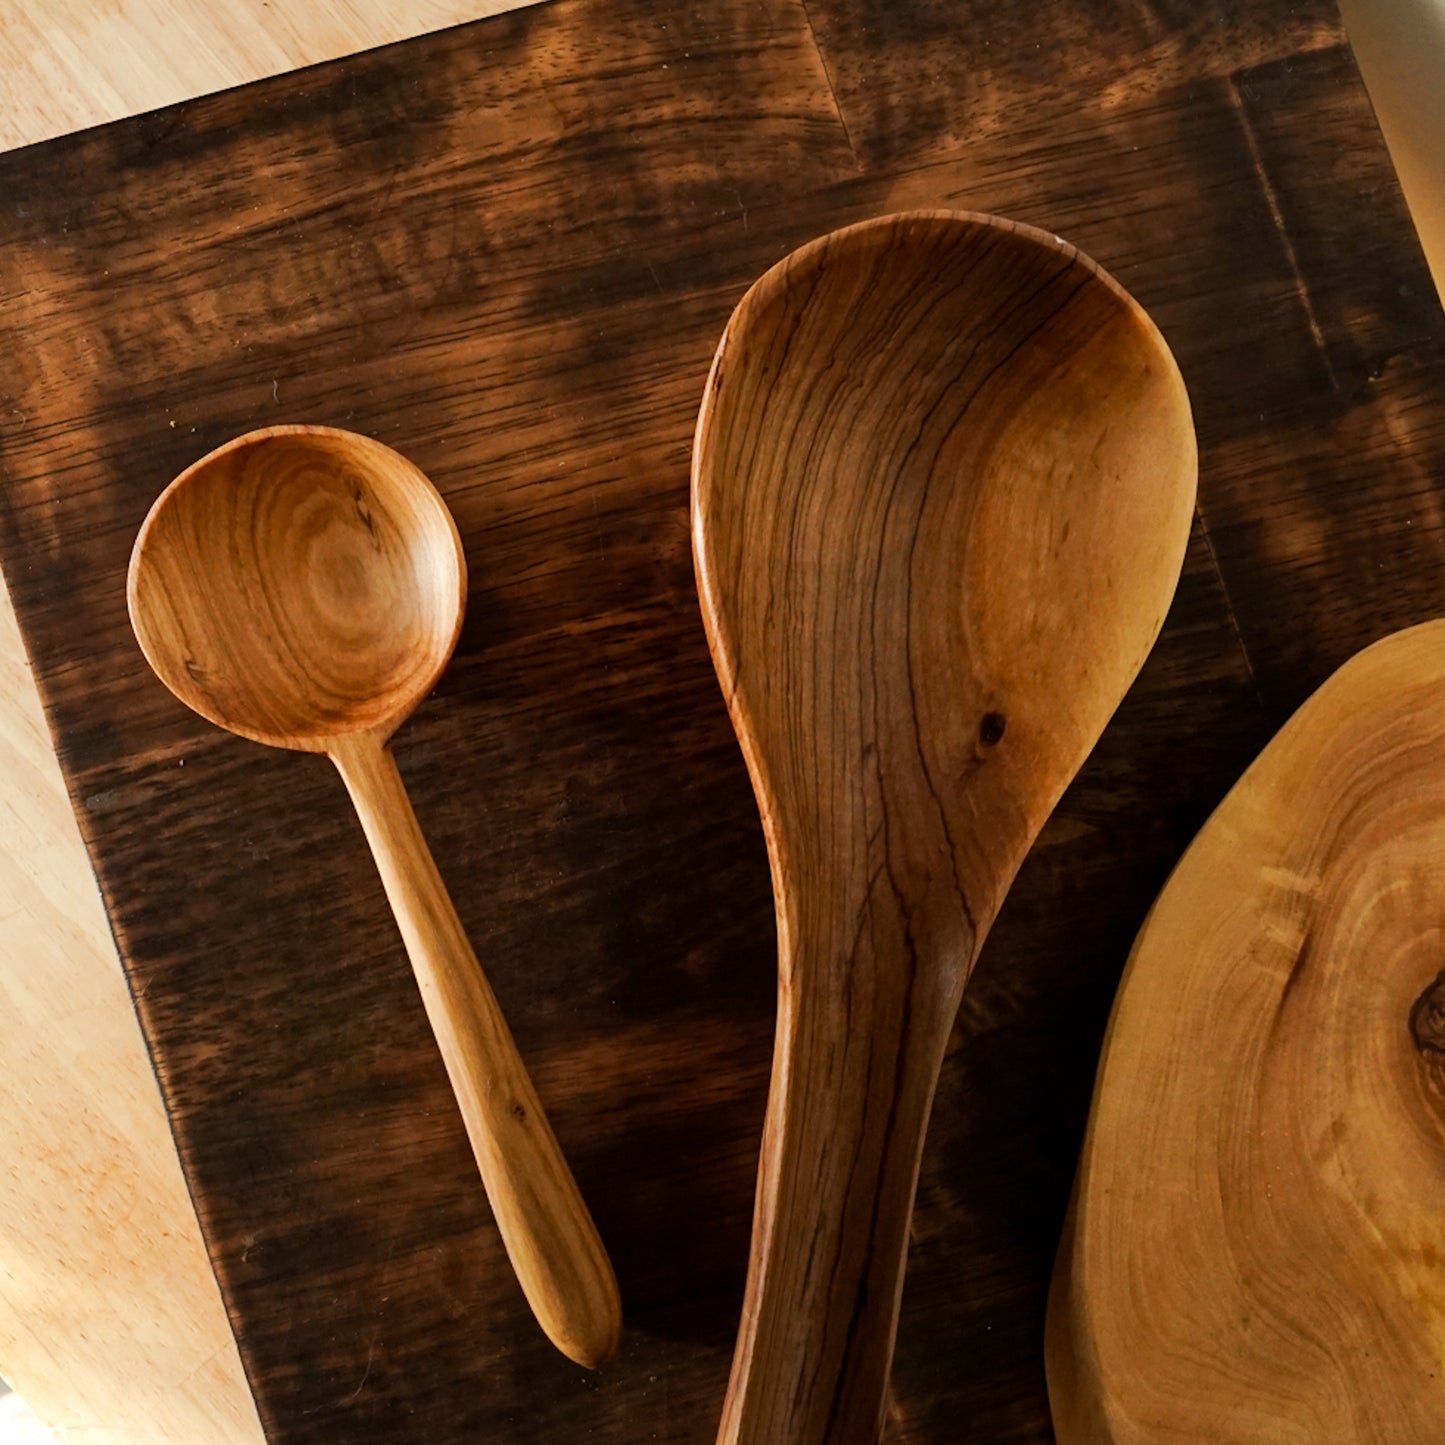 Grooved Handle Olive Wood Spoon